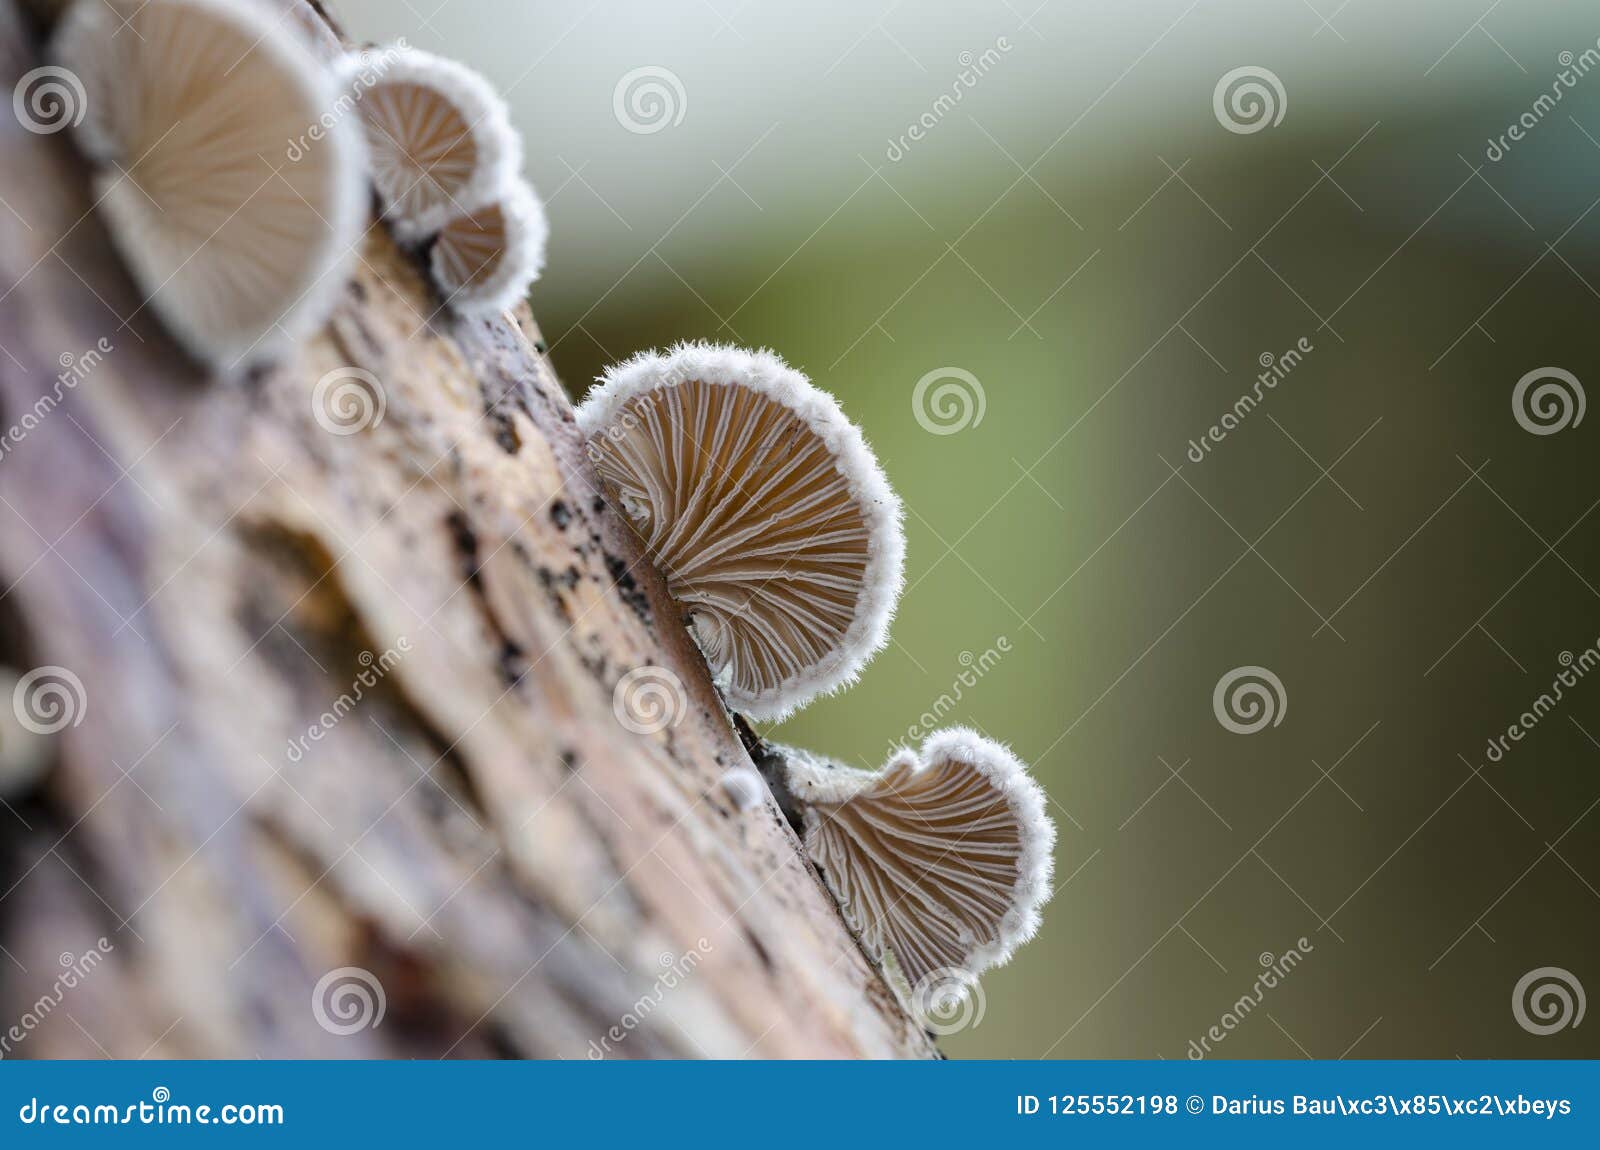 schizophyllum commune species of gilled fungus